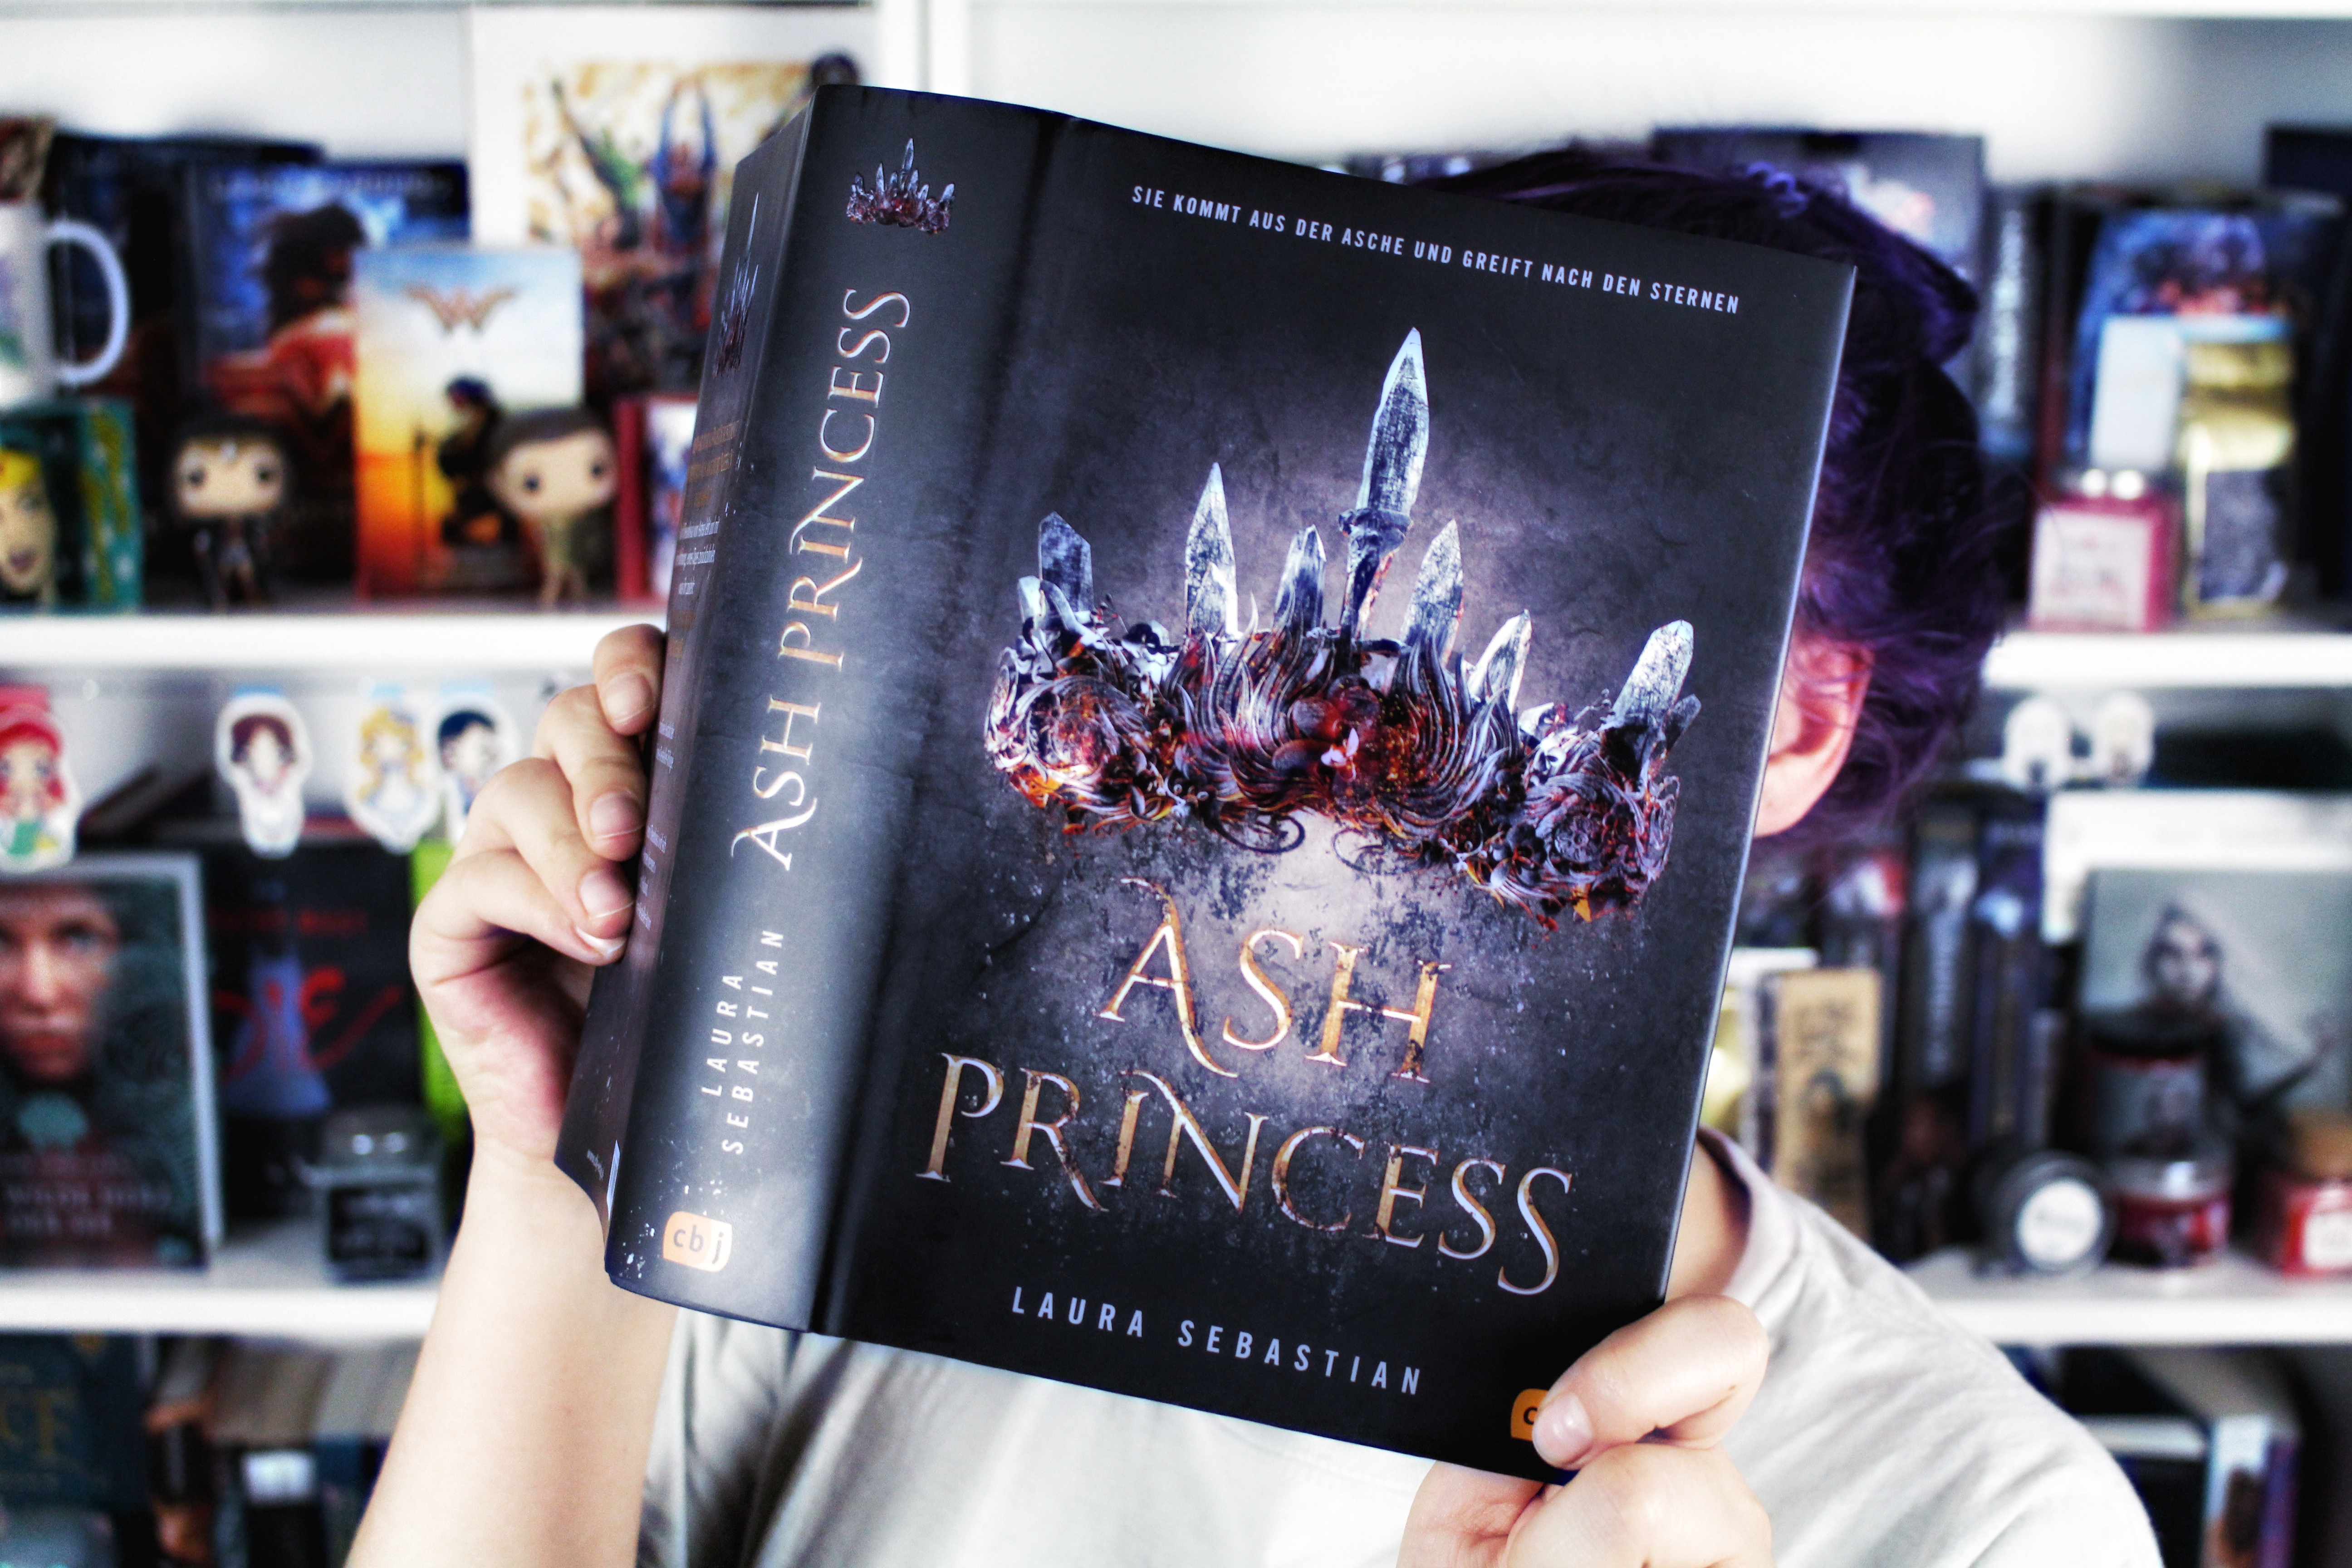 Rezension: Ash Princess / Laura Sebastian | 5 Gründe zum Buch zu greifen